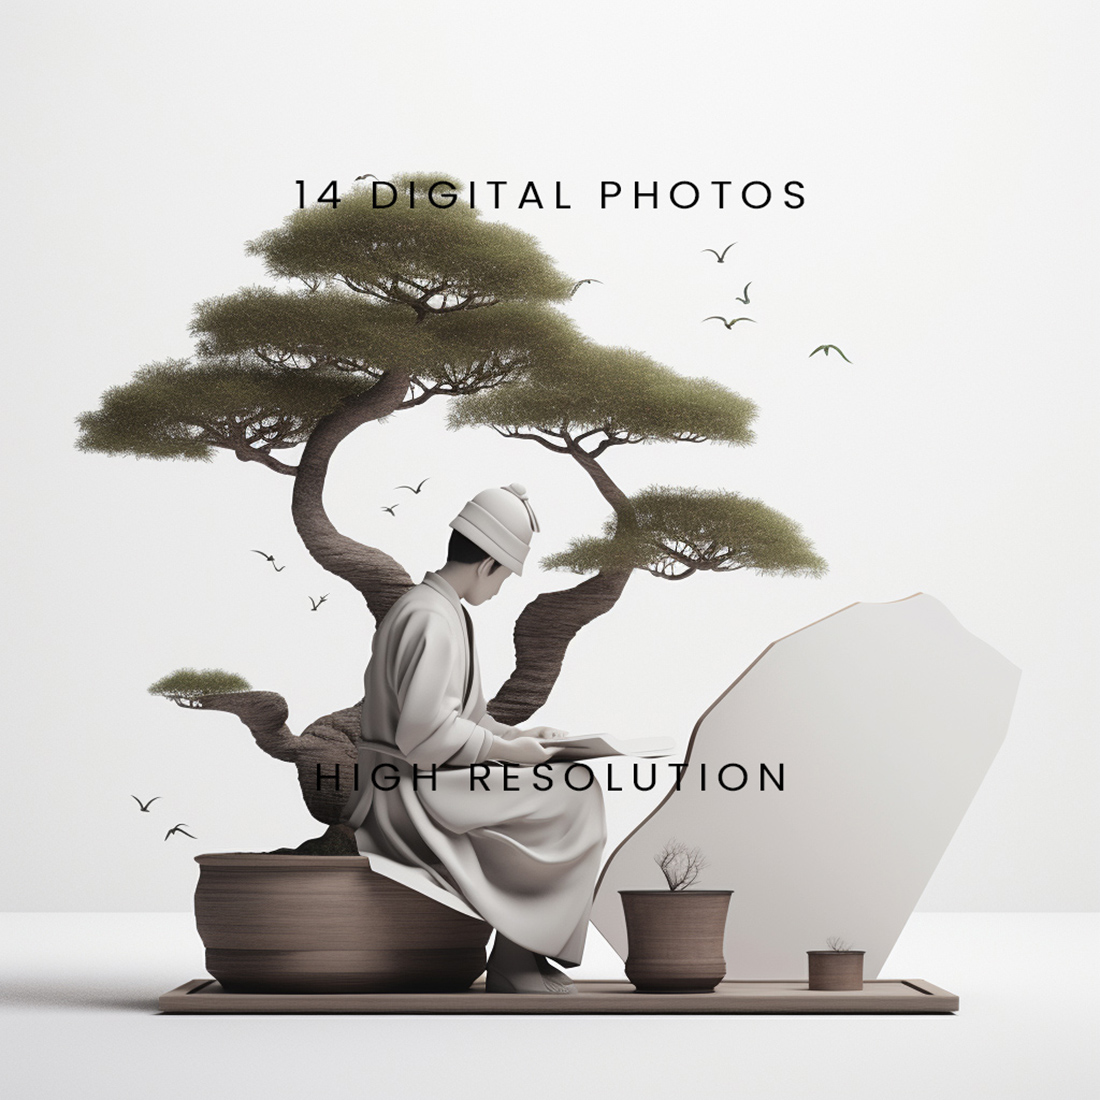 14 Digital Photos - Bonsai Tree preview image.